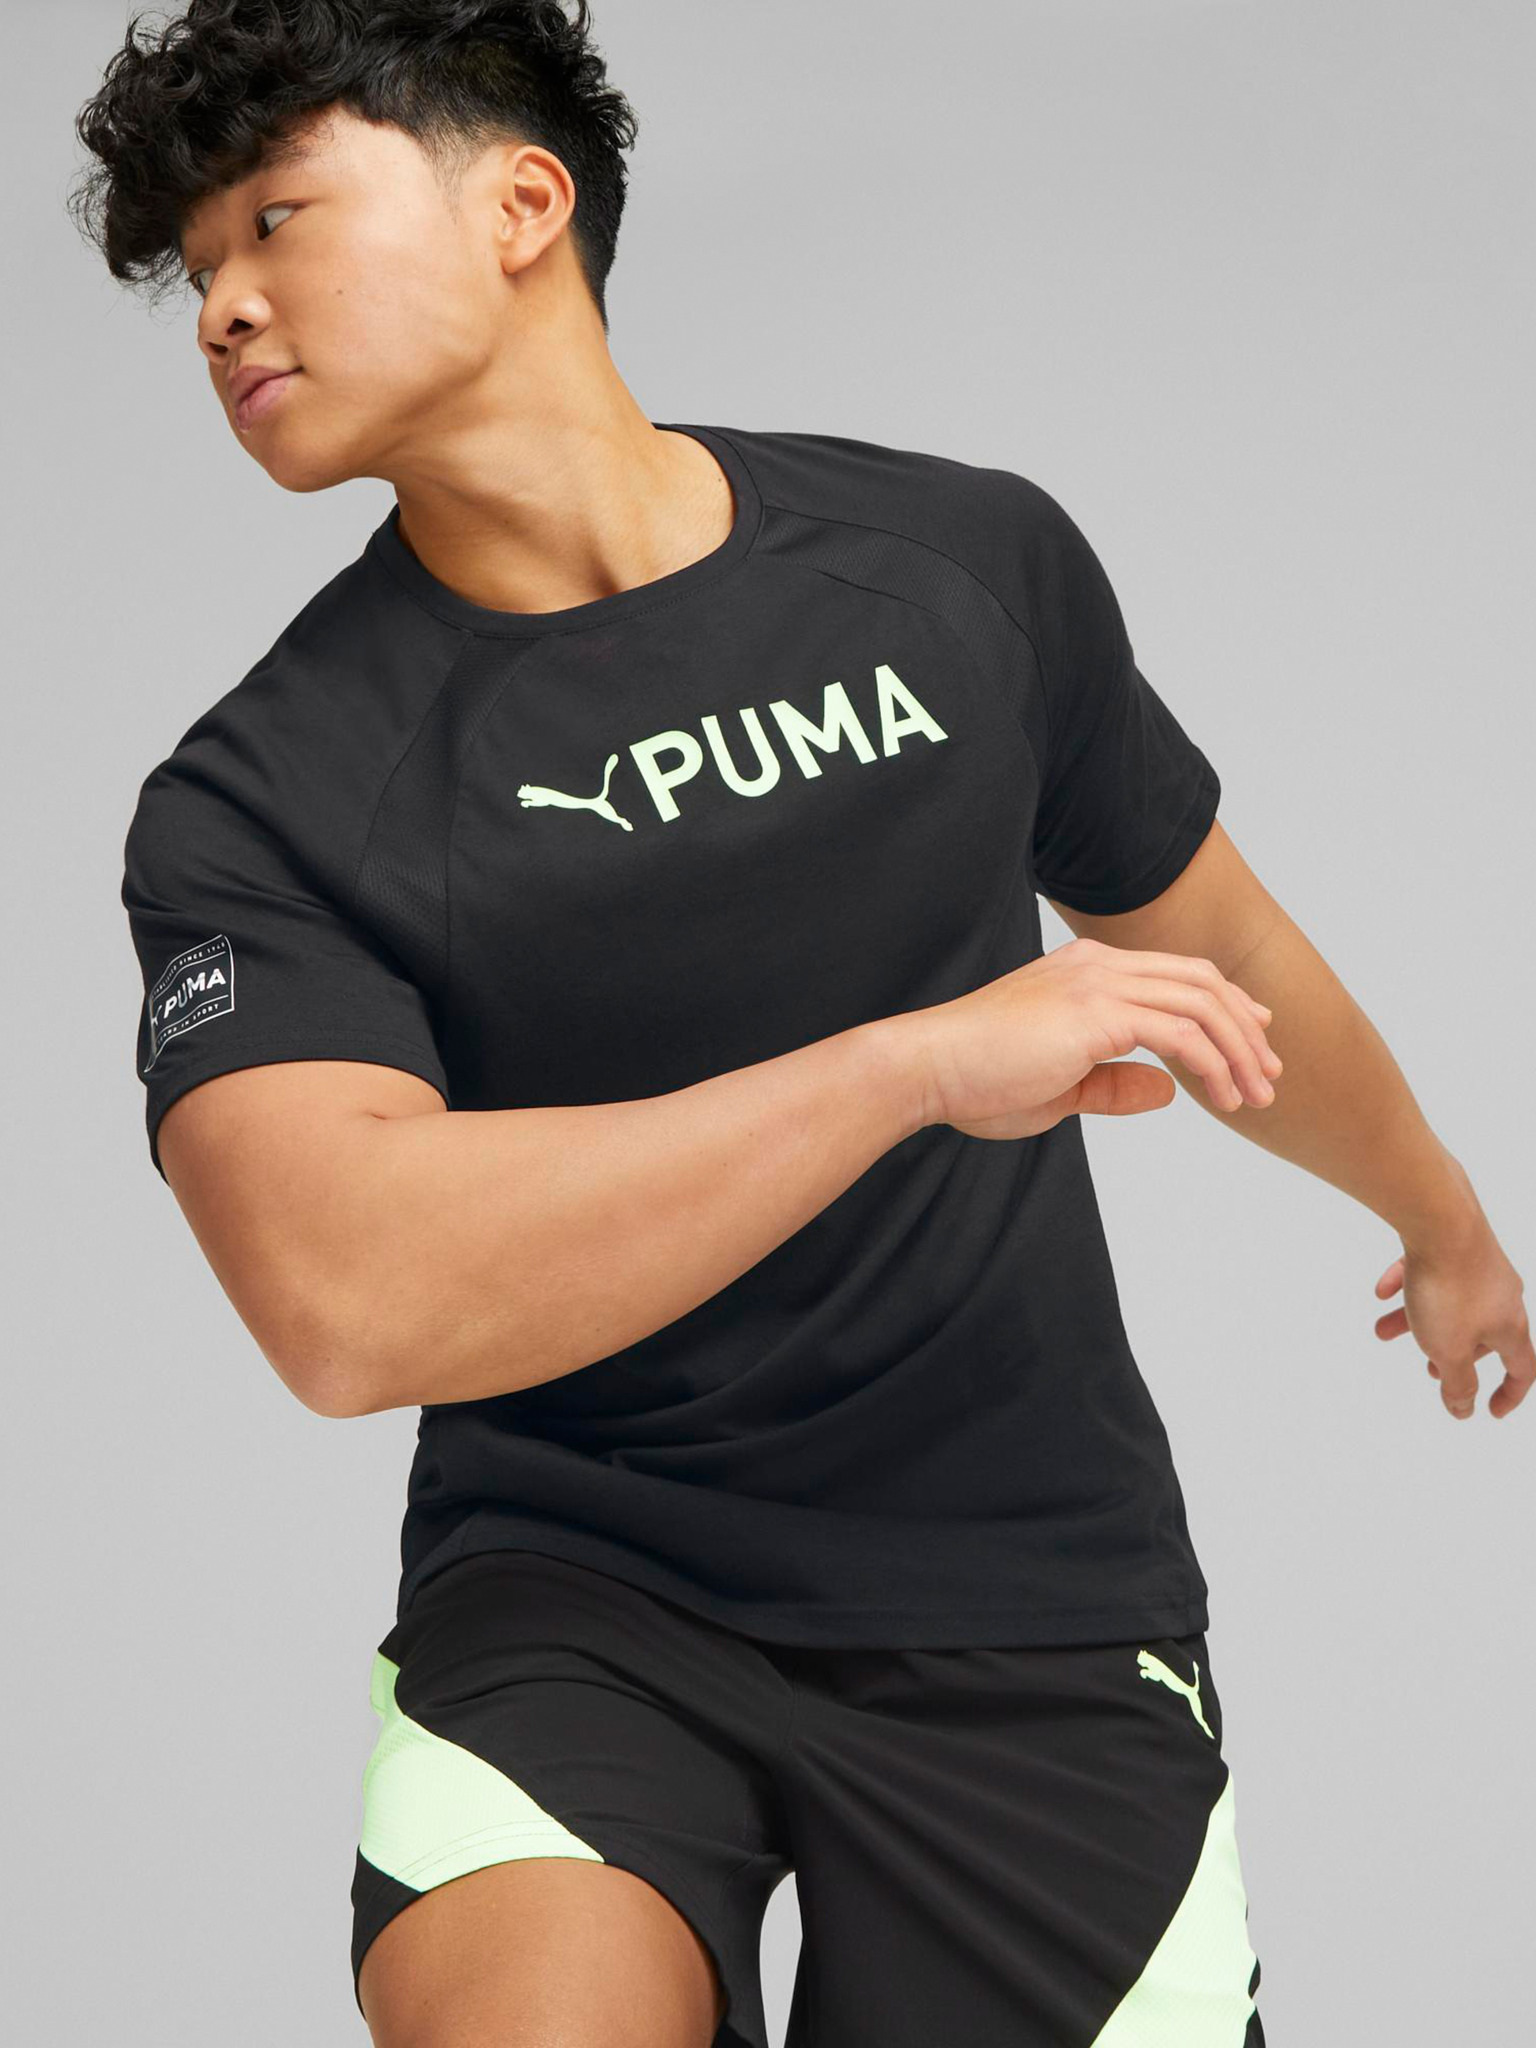 Triblend - Puma Ultrabreathe T-shirt Fit